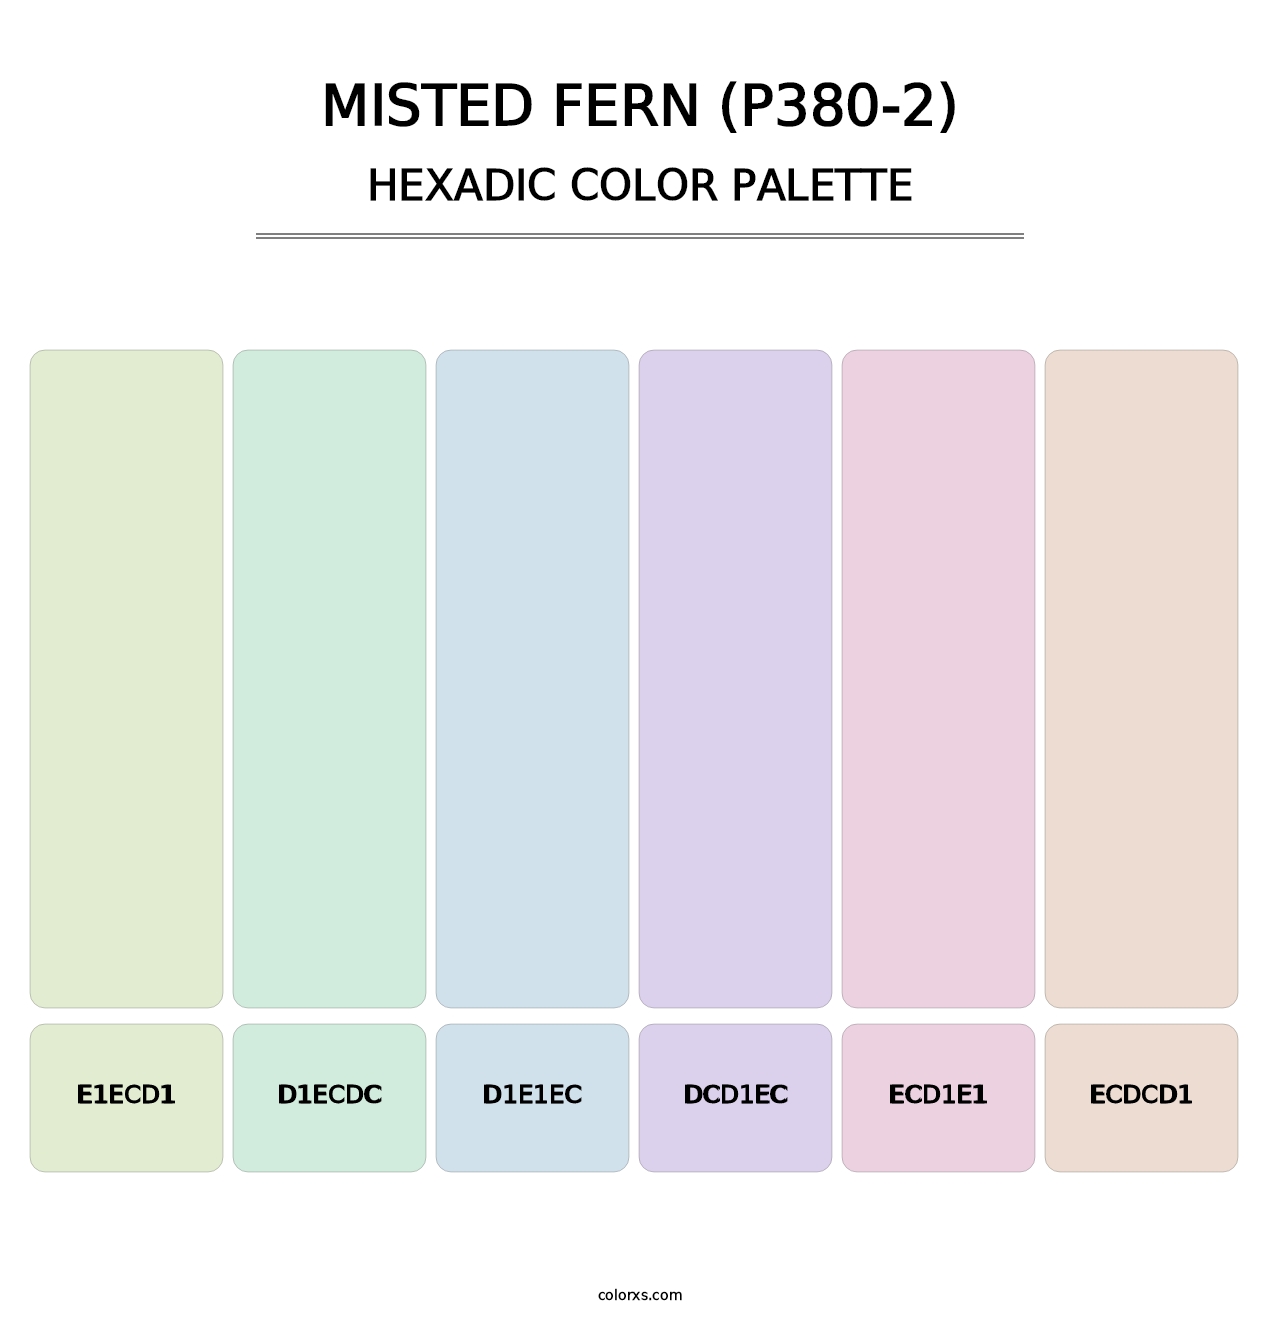 Misted Fern (P380-2) - Hexadic Color Palette